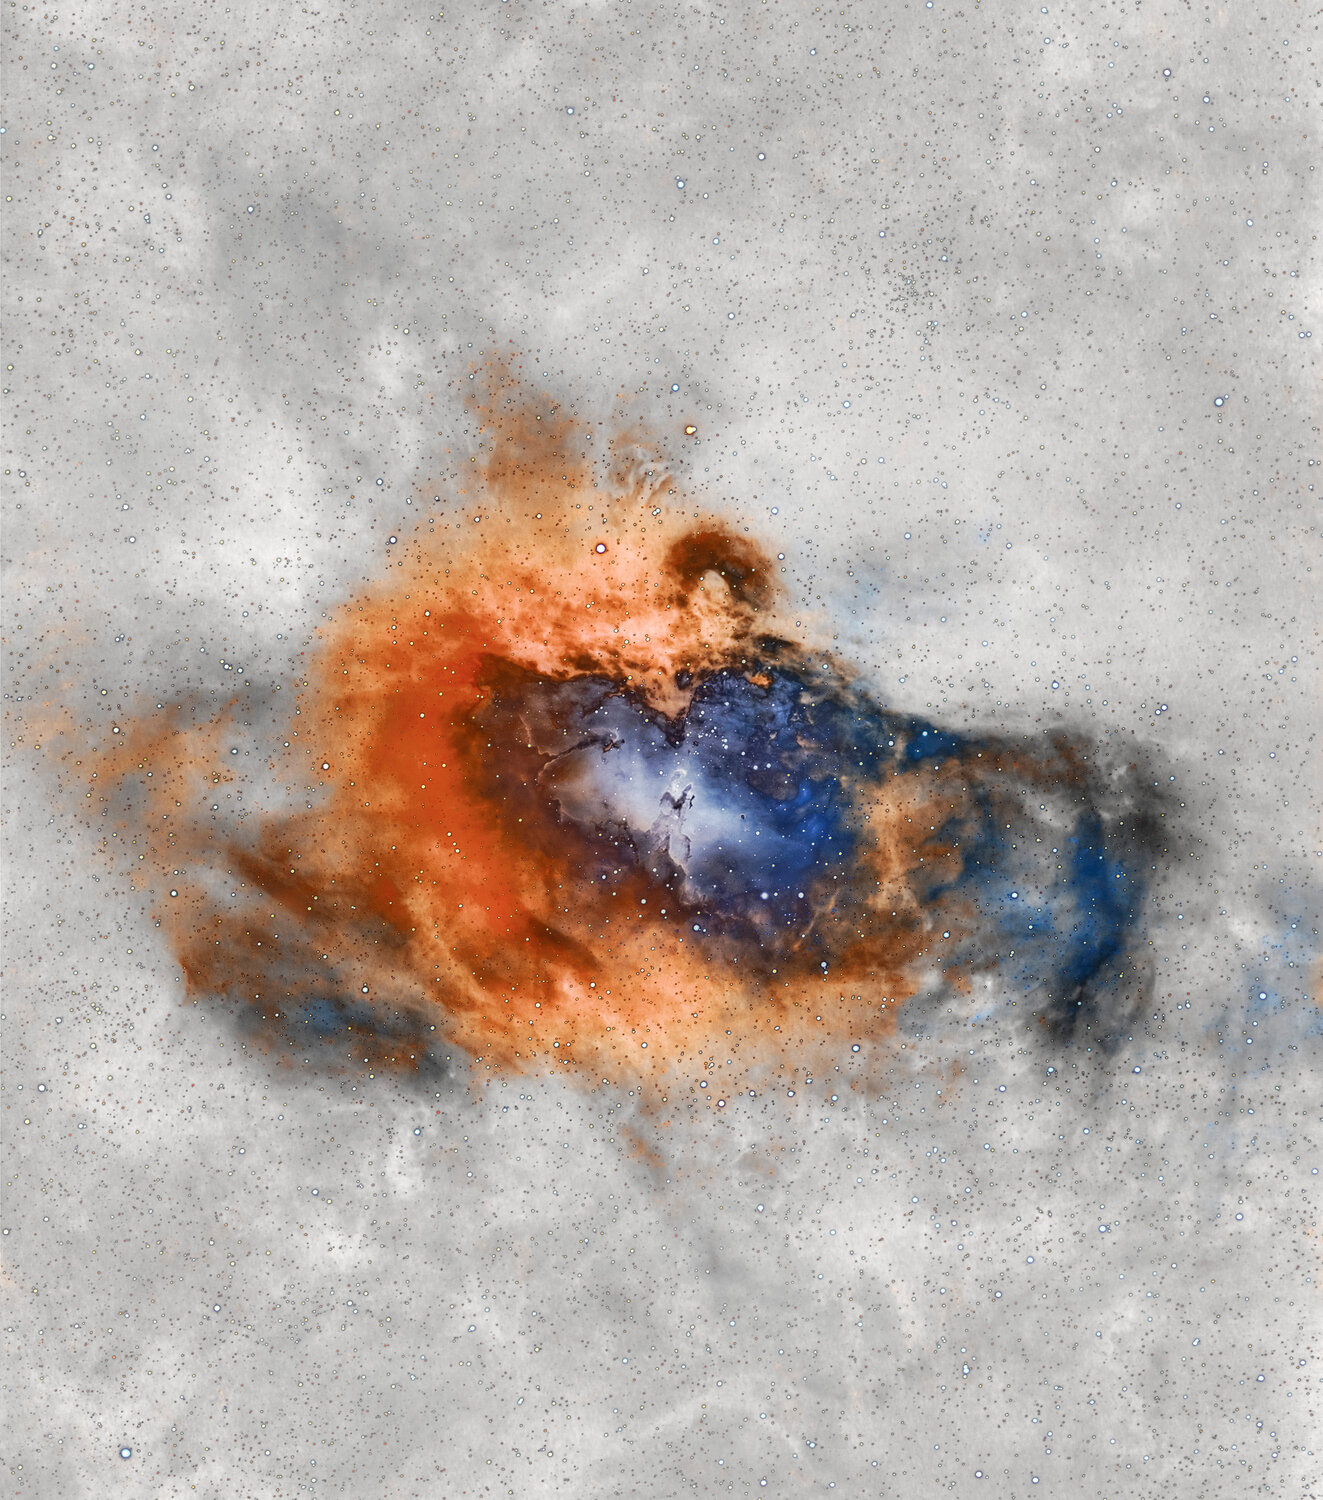 Magdalena art walk: "Dimensional Door," Eagle Nebula as
seen by Antoine Ribaut